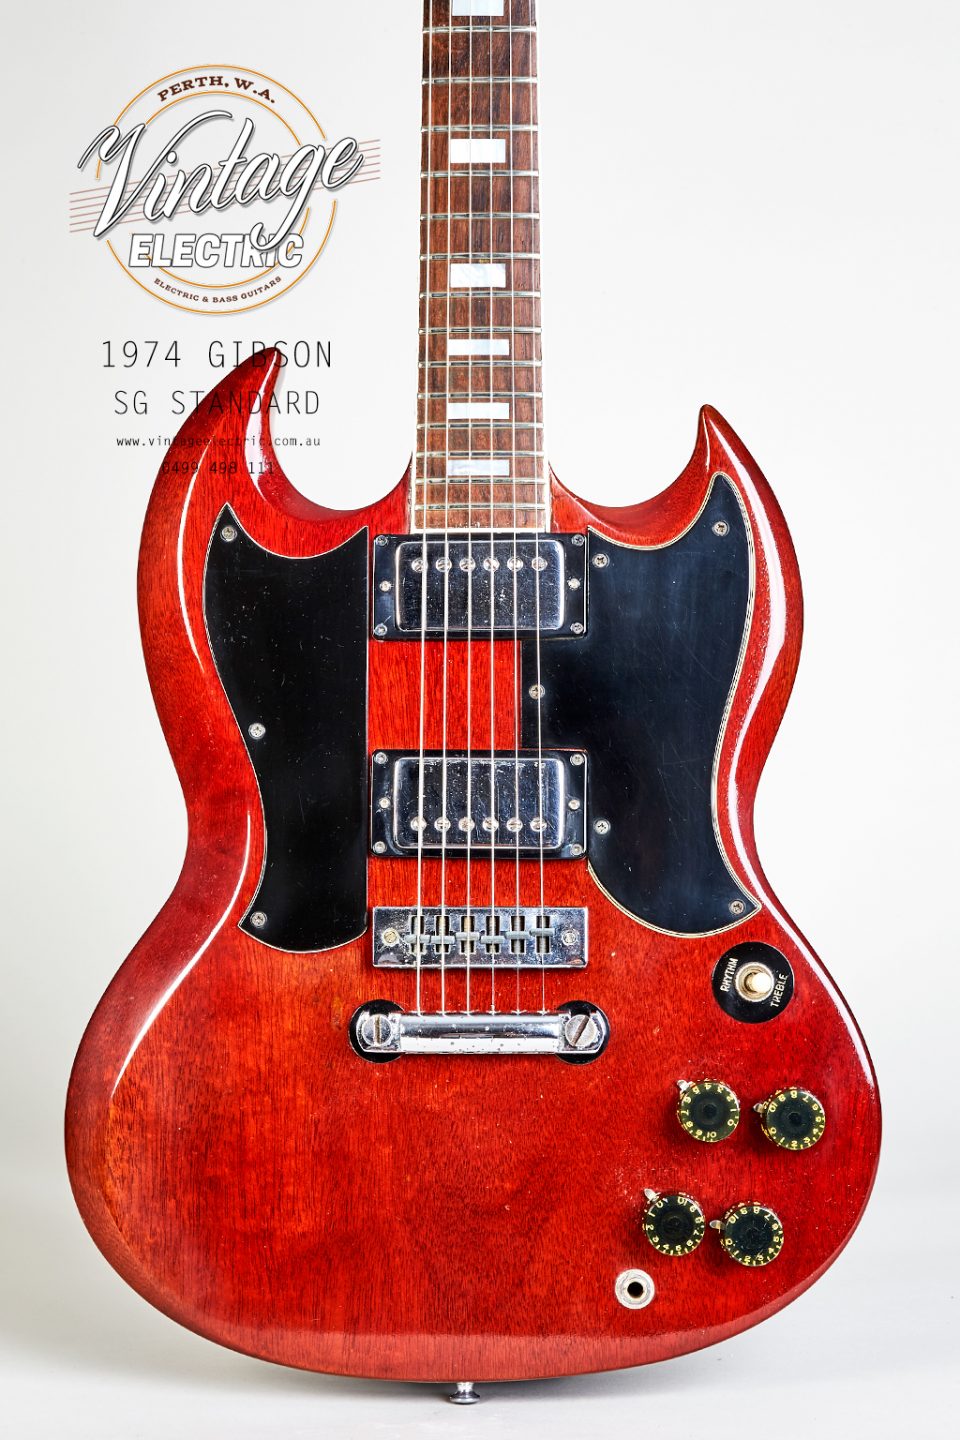 1974 Gibson SG Standard Body